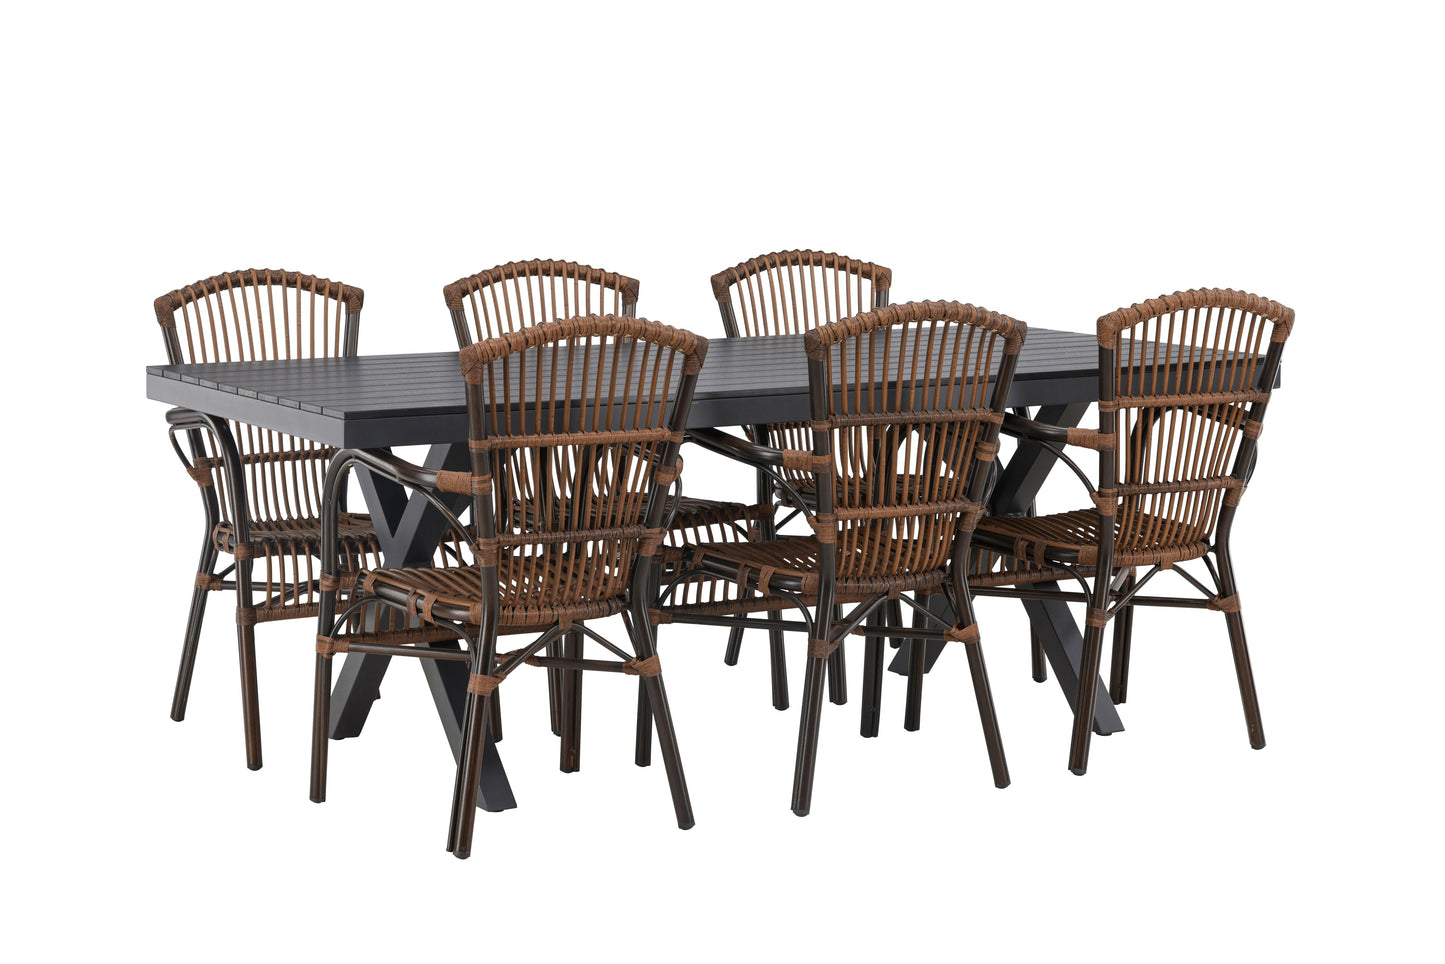 Garcia - Spisebord, Aluminium - Sort / Rektangulær 100*200* + Galera stol Aluminium - Brun / flet